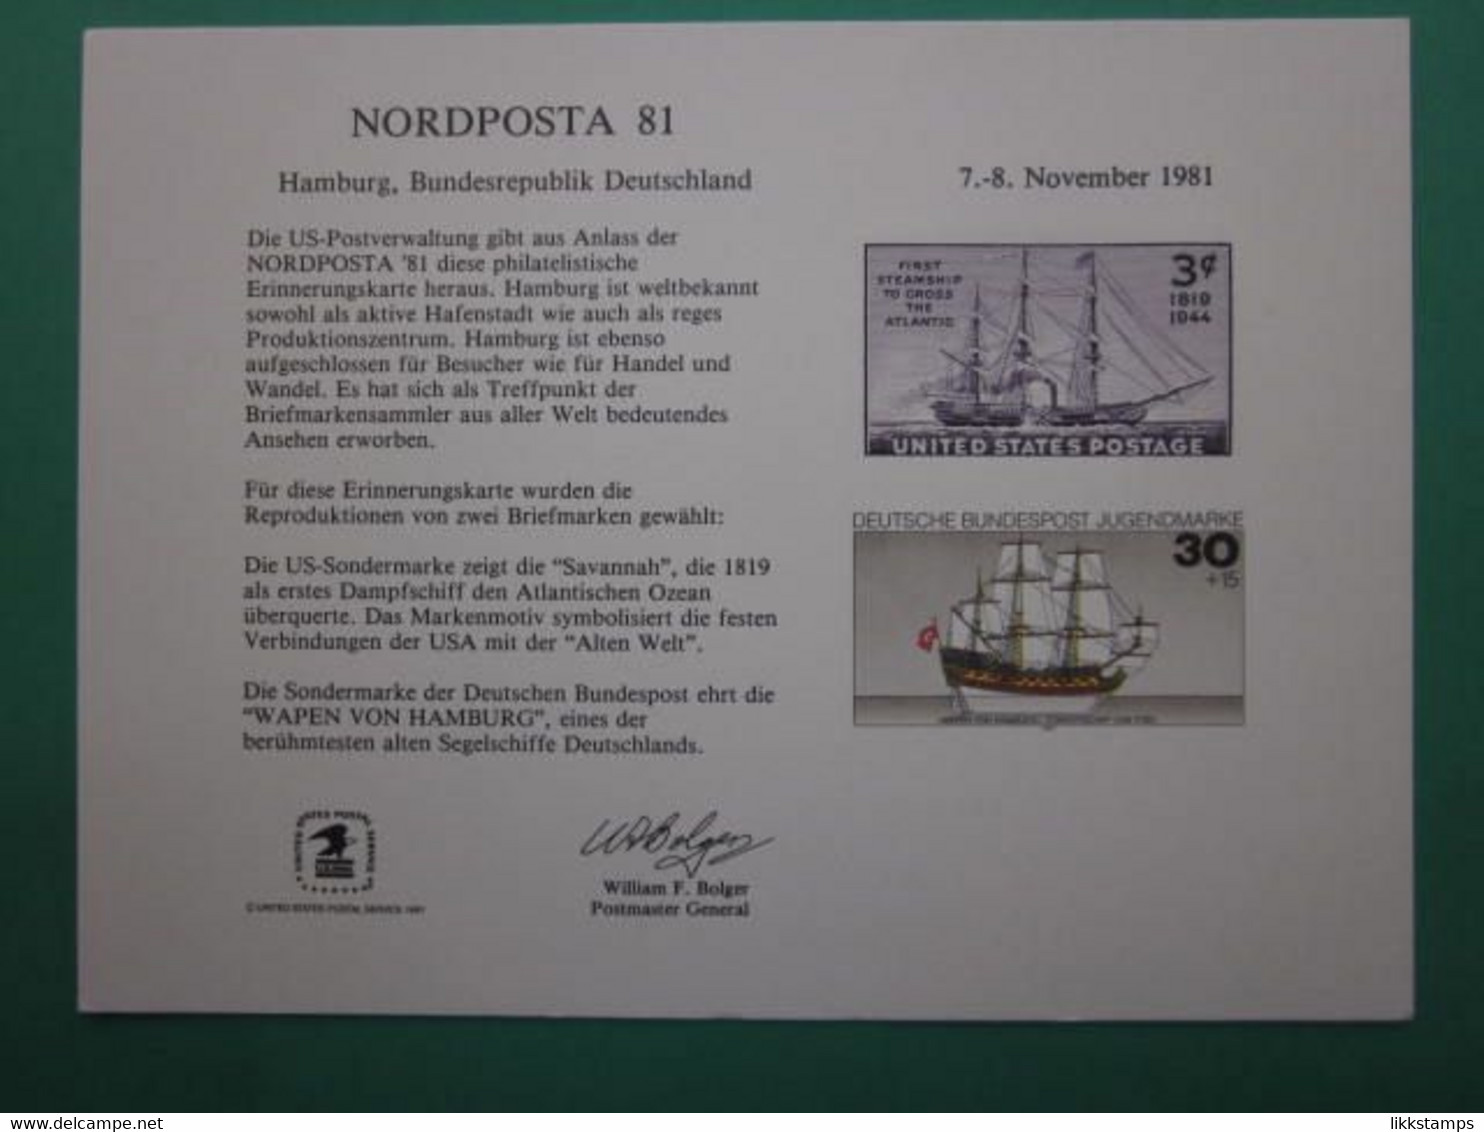 1981 A SOUVENIR CARD FOR NORDPOSTA 81, HAMBURG, GERMANY. ( 02188 ) - Recordatorios